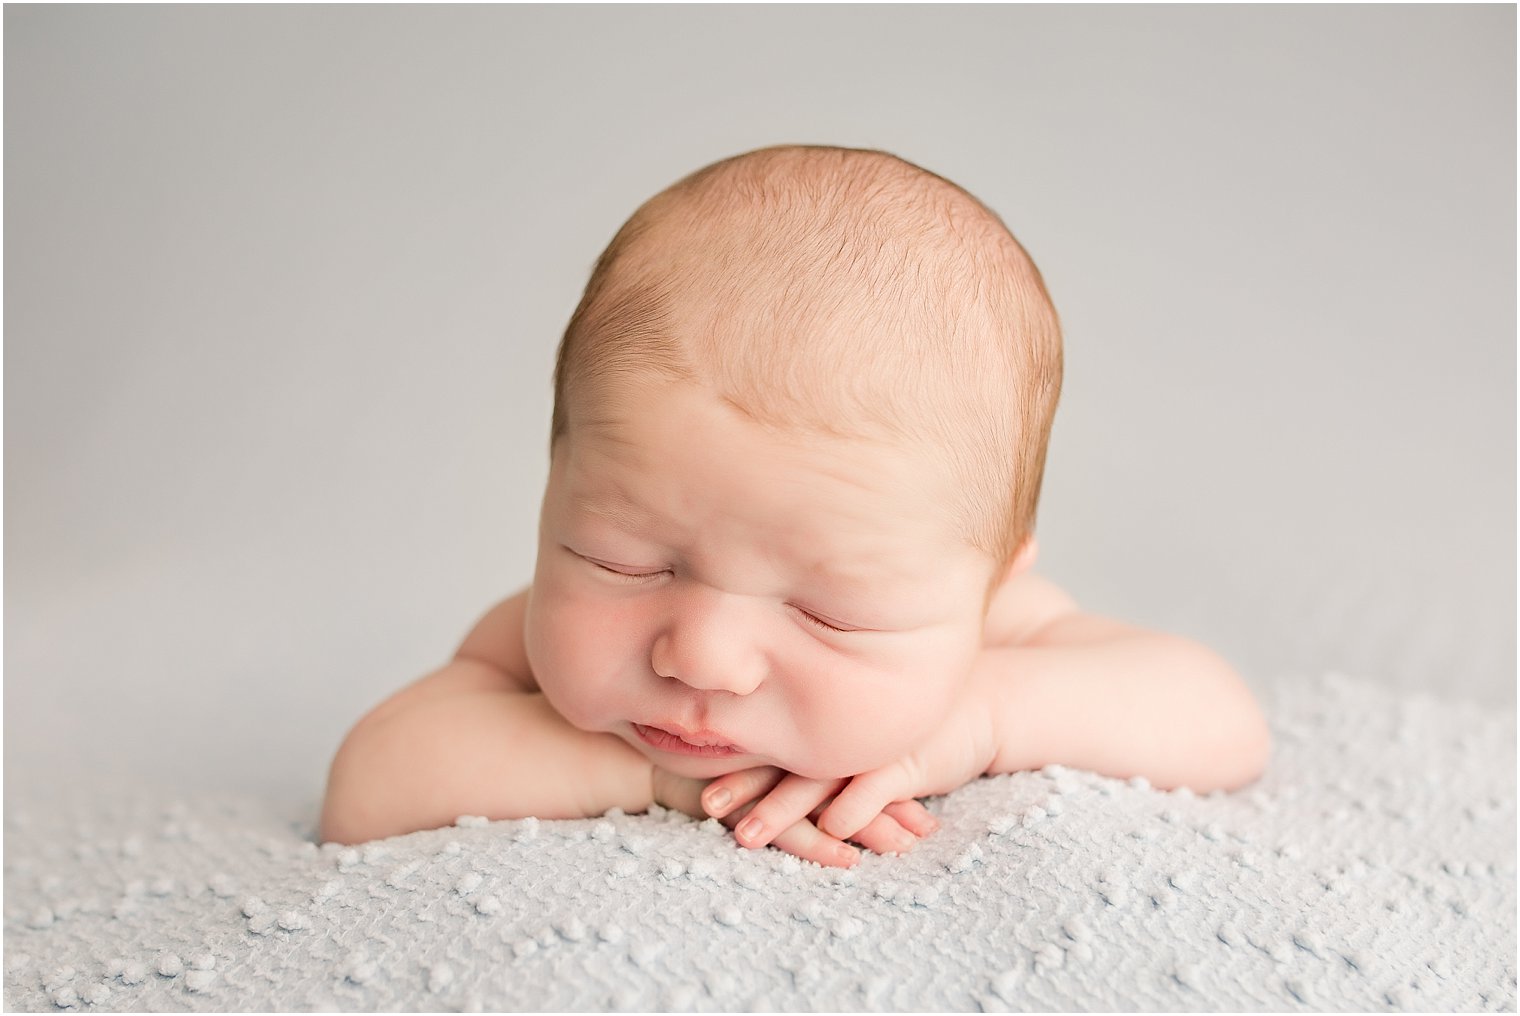 Newborn baby in chin on hands pose